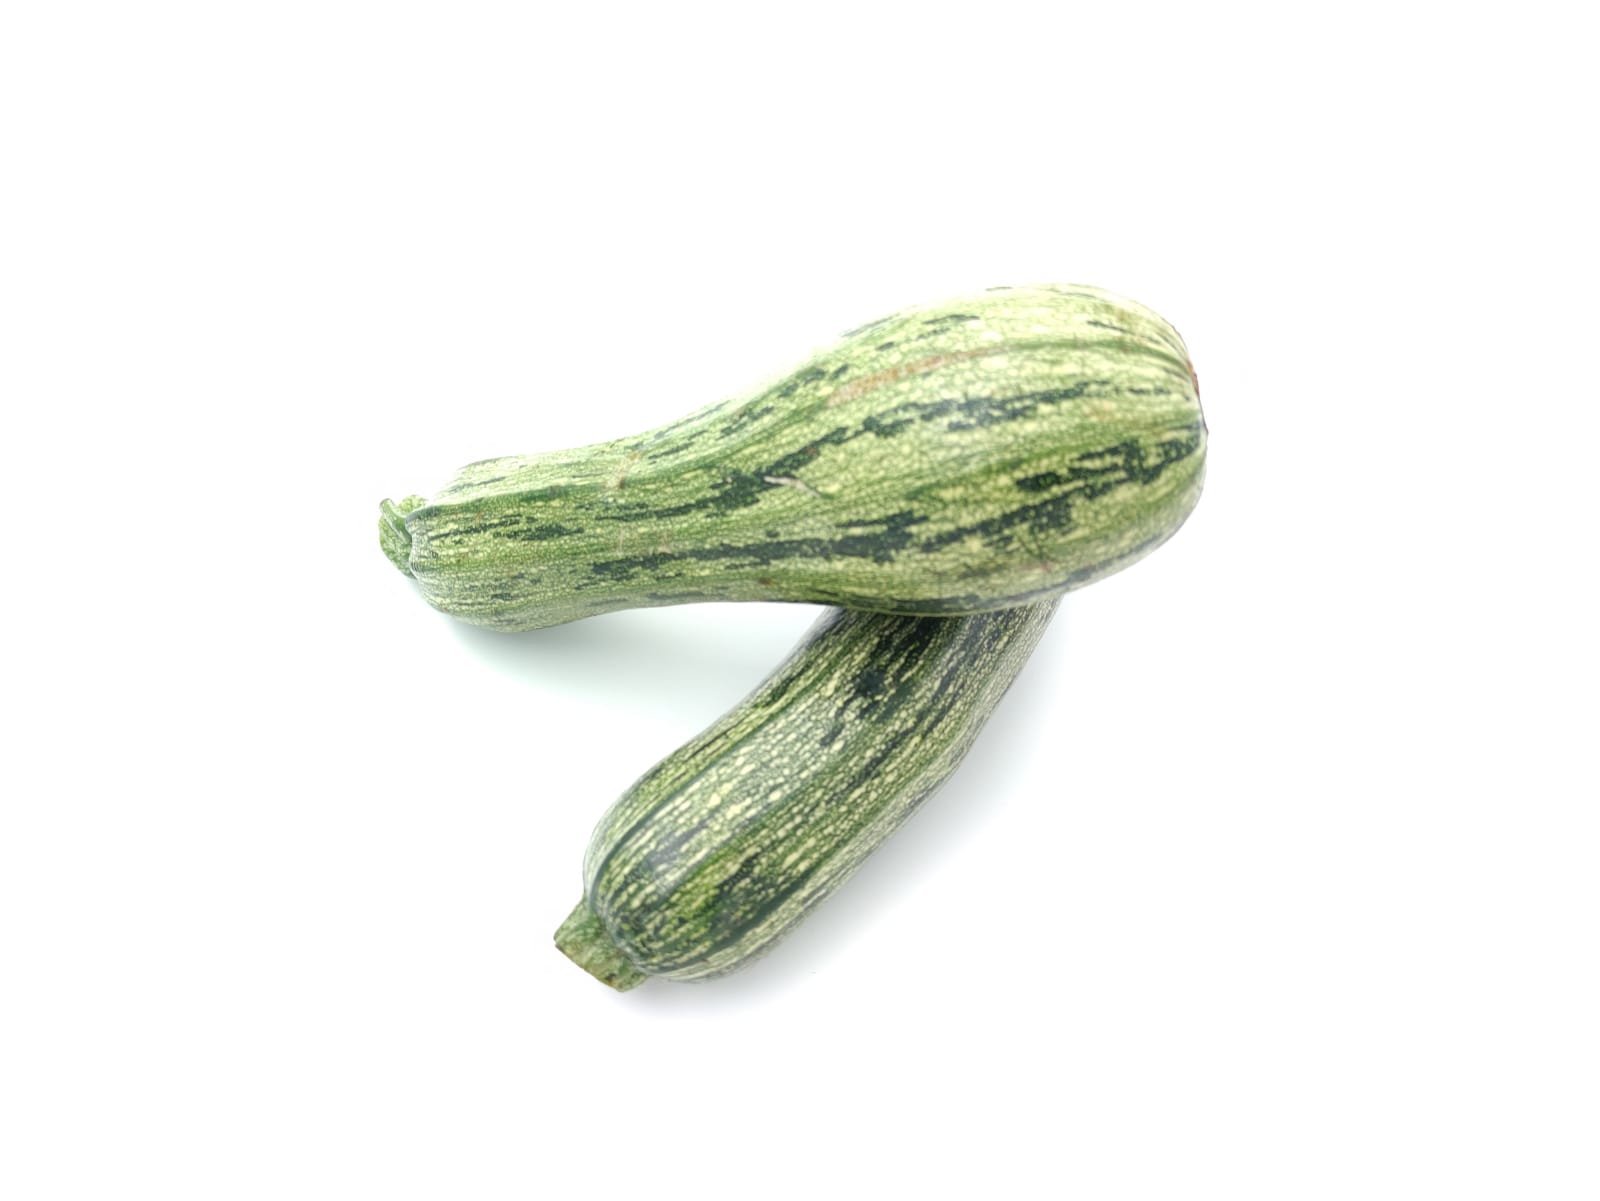 Ecotambo - Zucchini  - Calabacín Grande